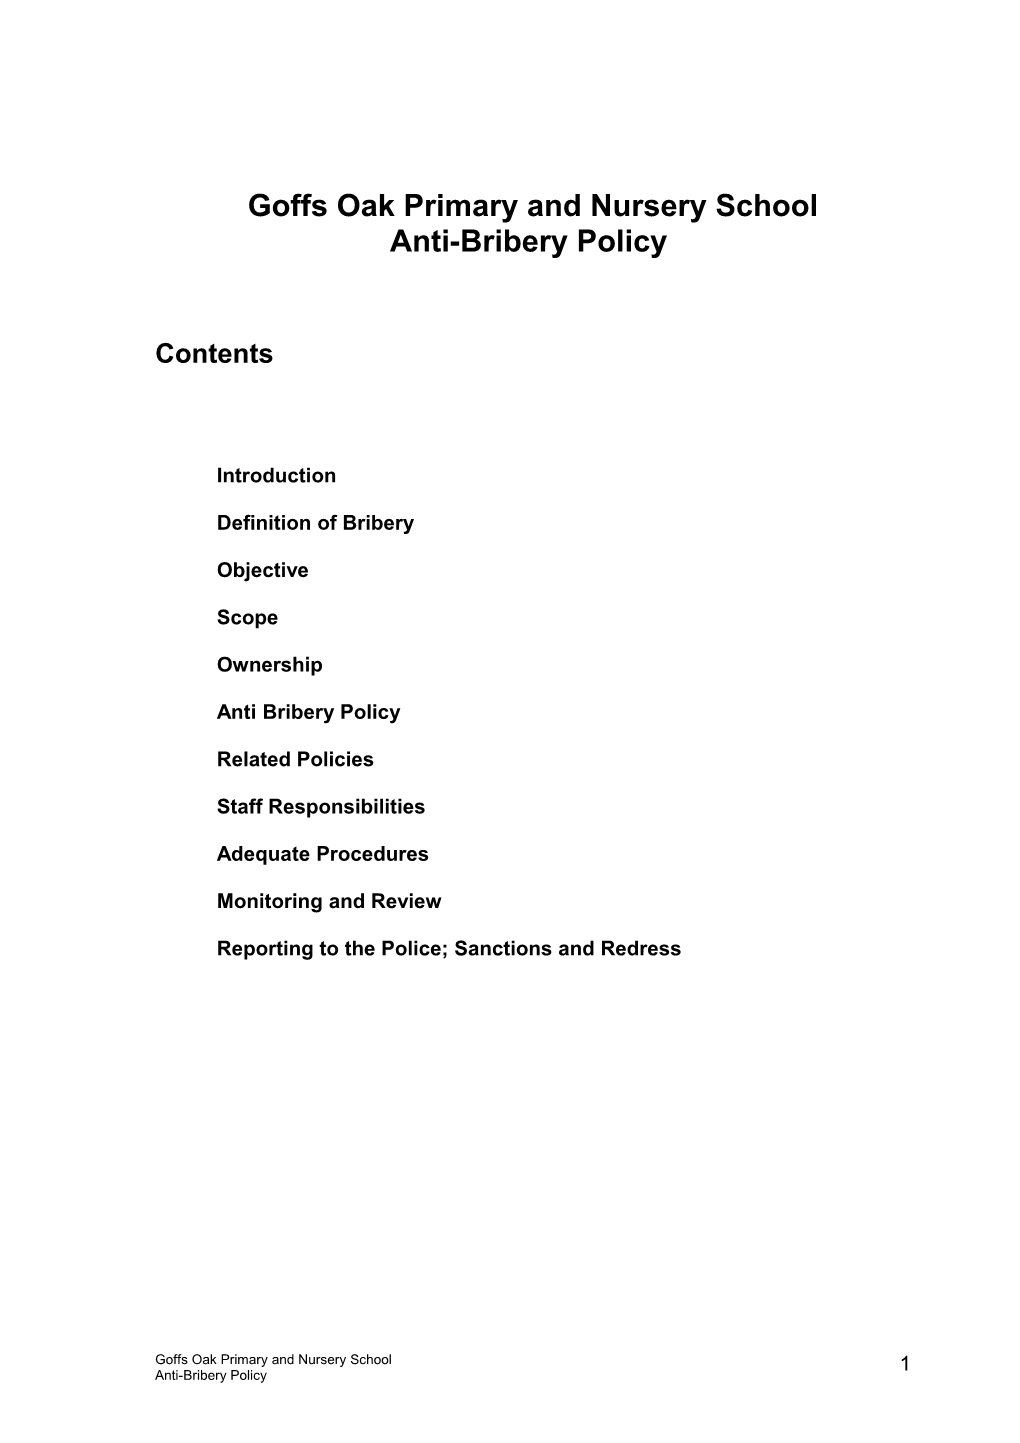 Model Anti-Bribery Policy for Schools